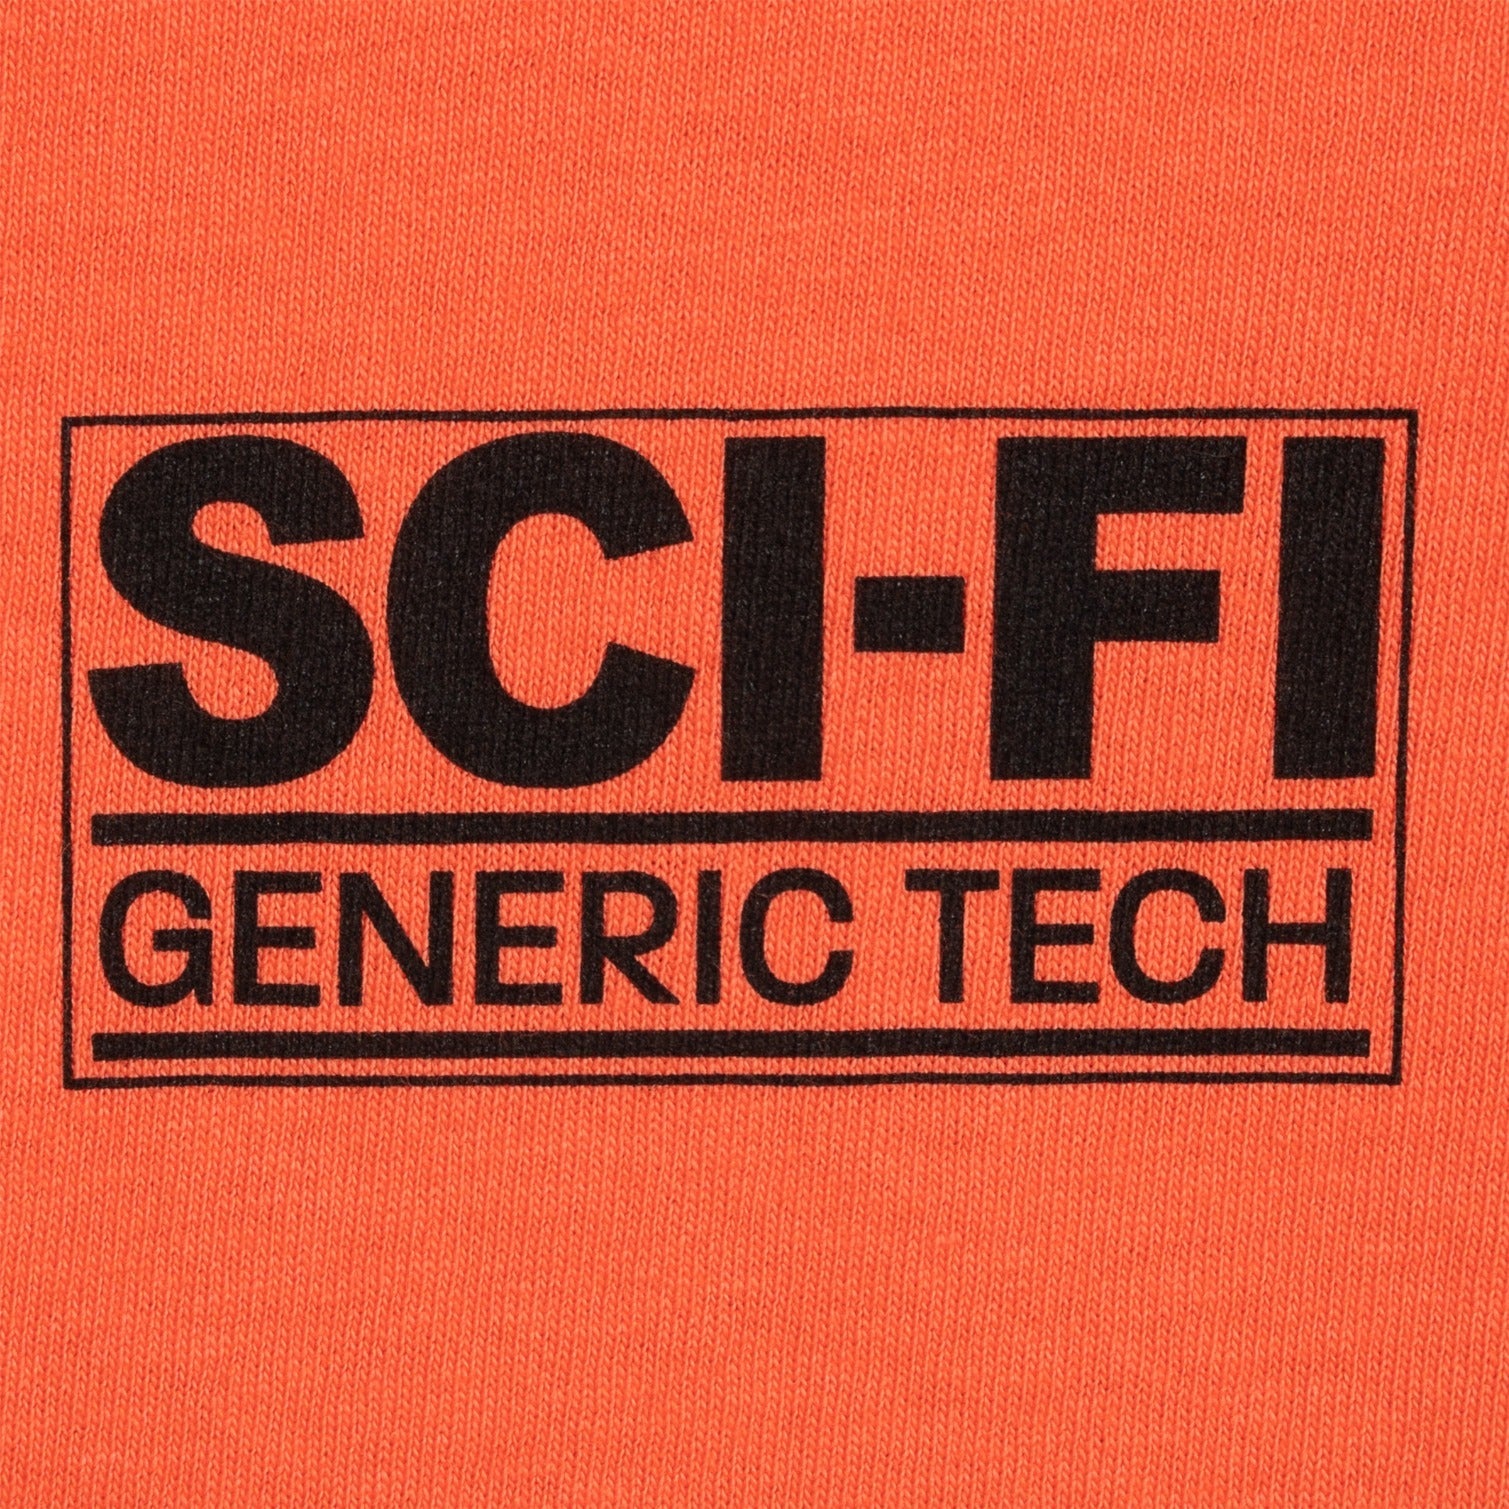 Sci-Fi Fantasy Generic Tech Short Sleeve T-Shirt (Bright Salmon) - Apple Valley Emporium